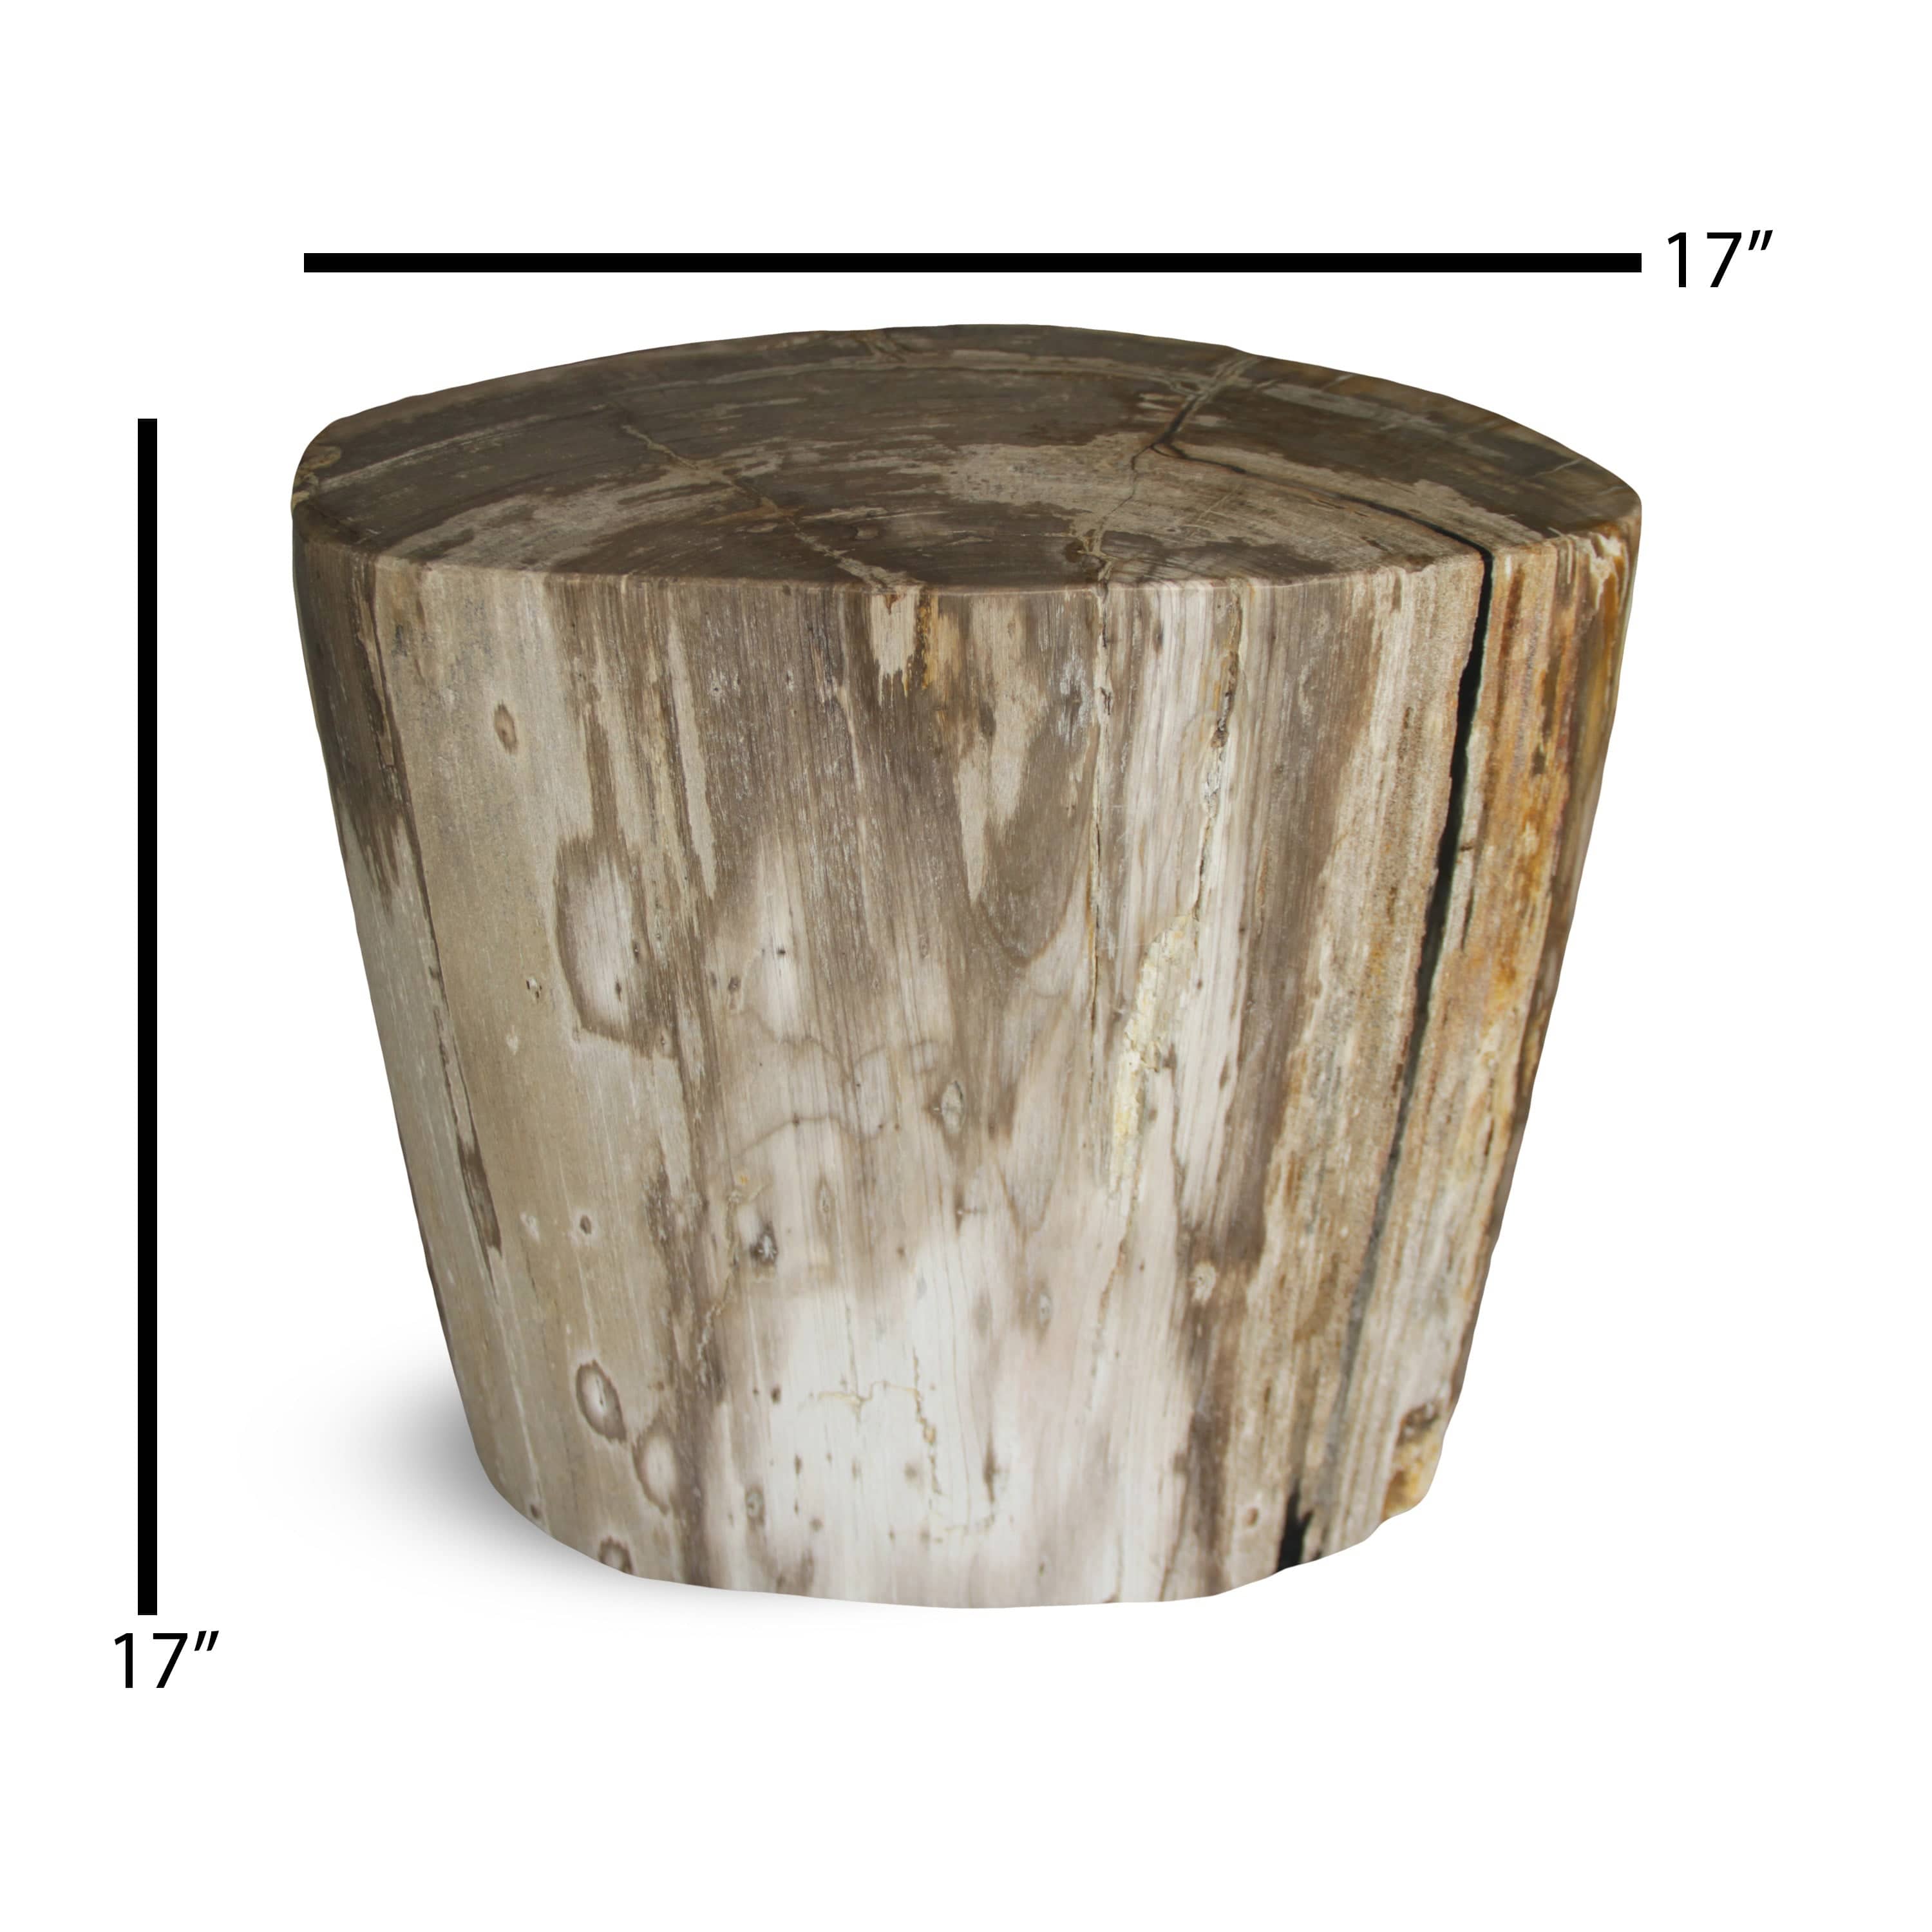 Kalifano Petrified Wood Petrified Wood Round Stump / Stool from Indonesia - 16" / 172 lbs PWS3200.007